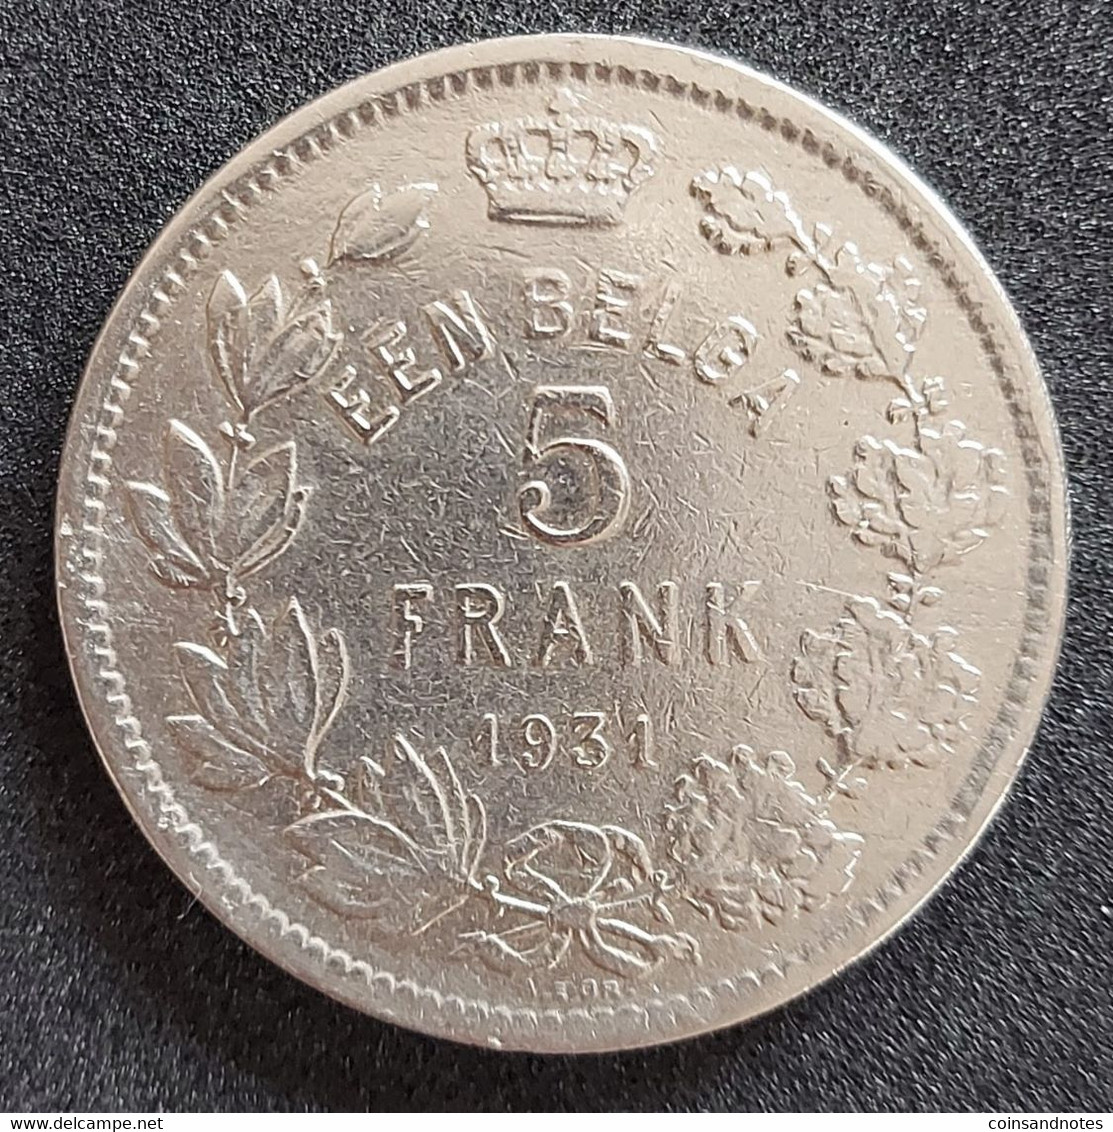 Belgium 1931 - 5 Frank/Een Belga Nikkel VL - Albert I - Morin 385a - FDC - 5 Francs & 1 Belga